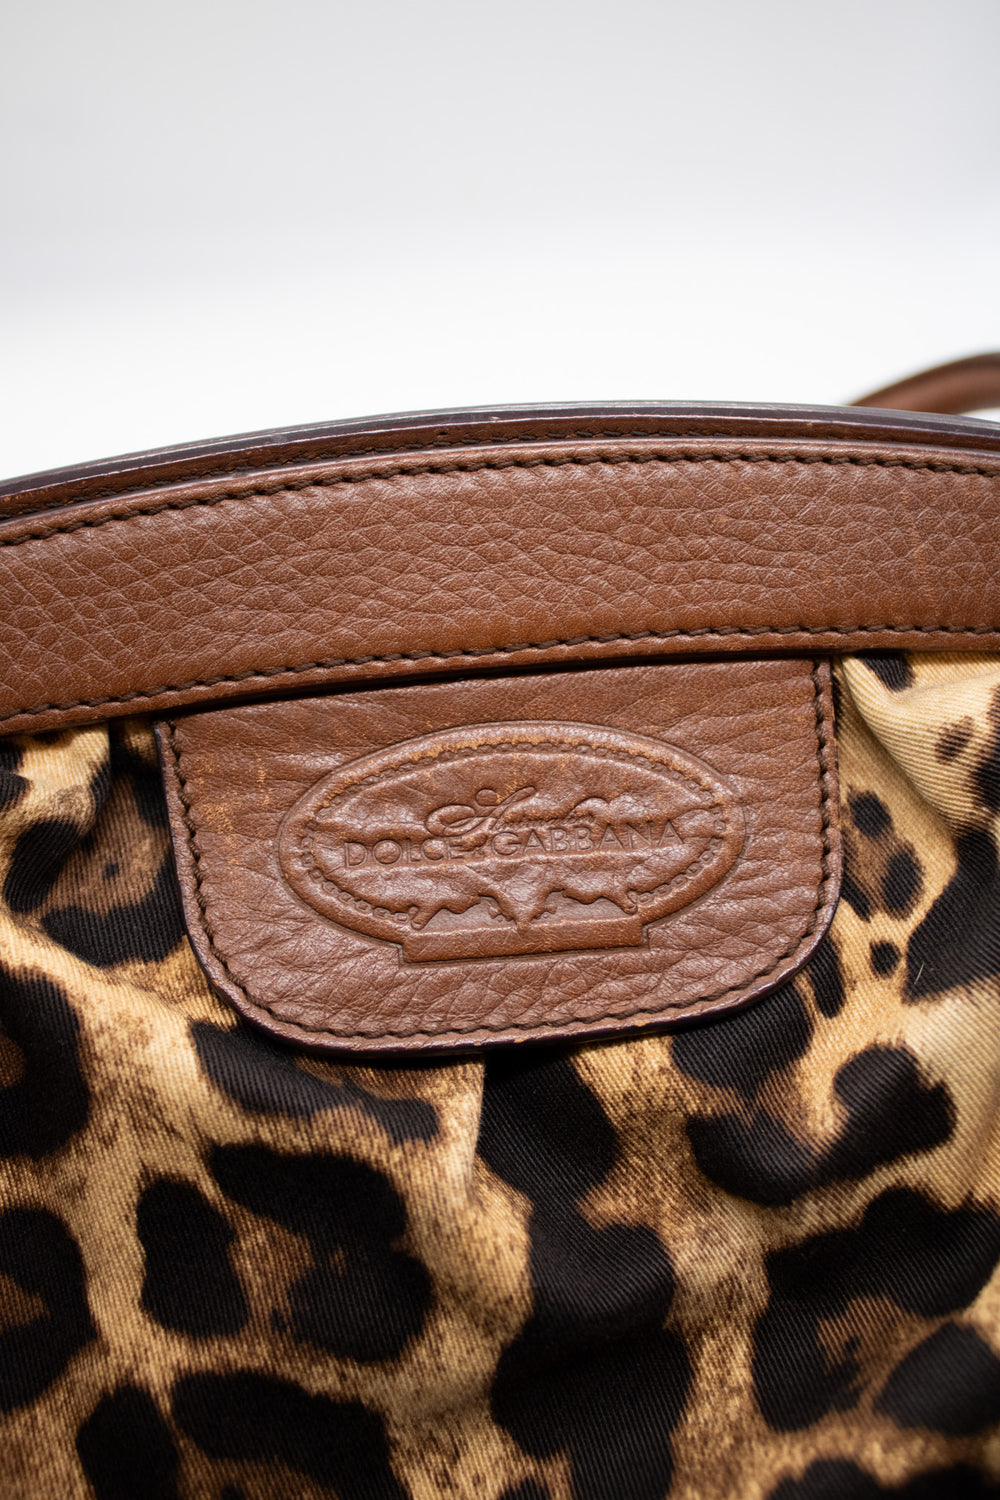 Dolce & Gabbana Leopard Semi Shoulder Duffle Bag